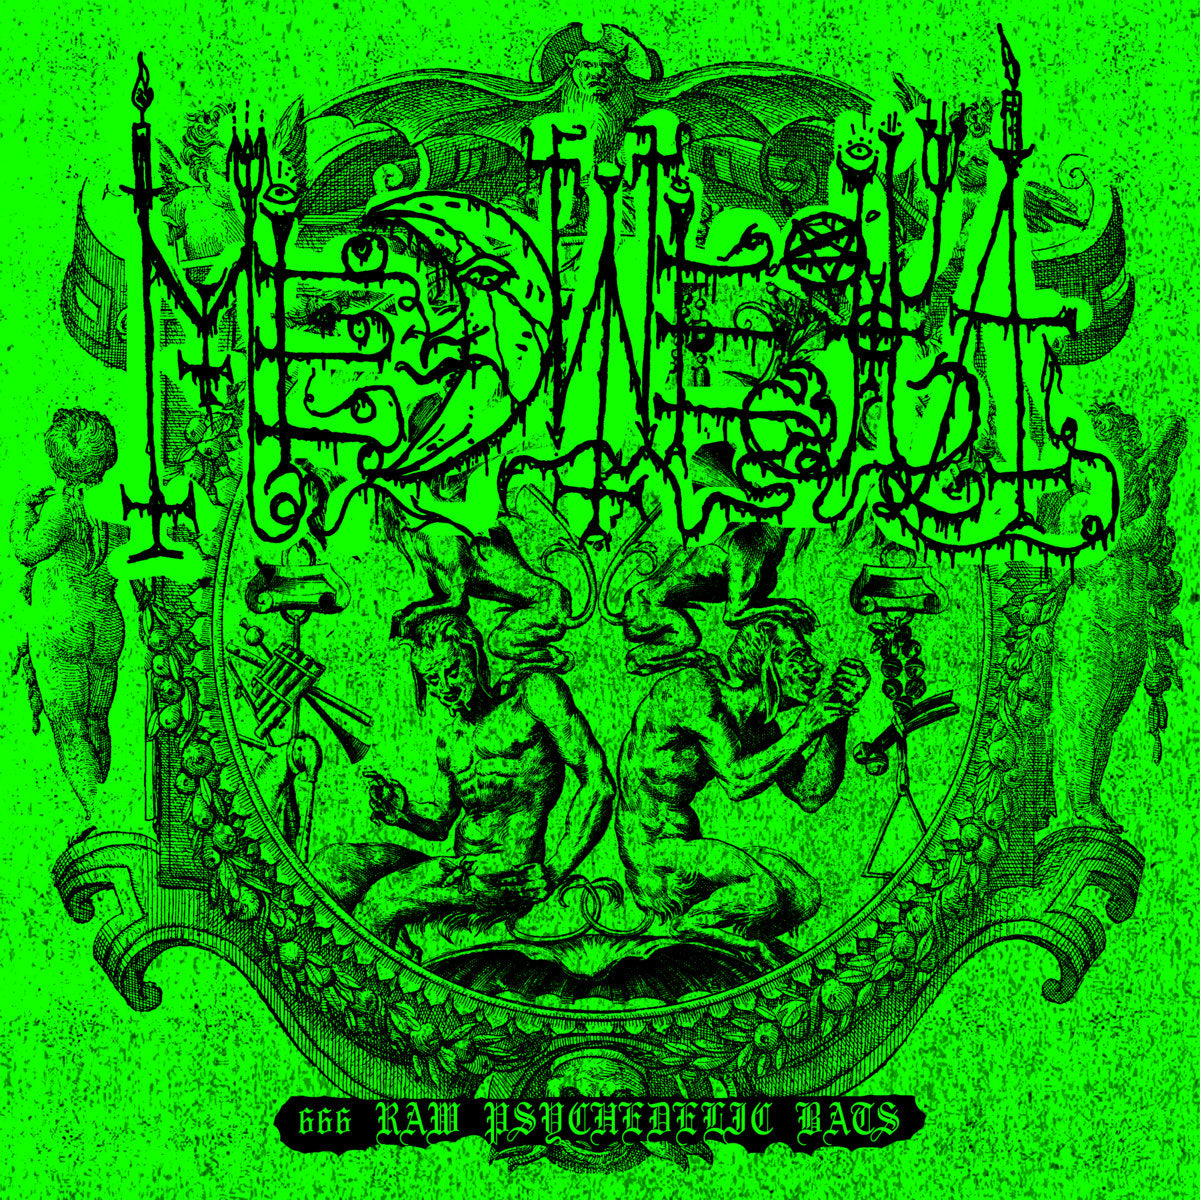 Medwegya - 666 Raw Psychedelic Bats LP